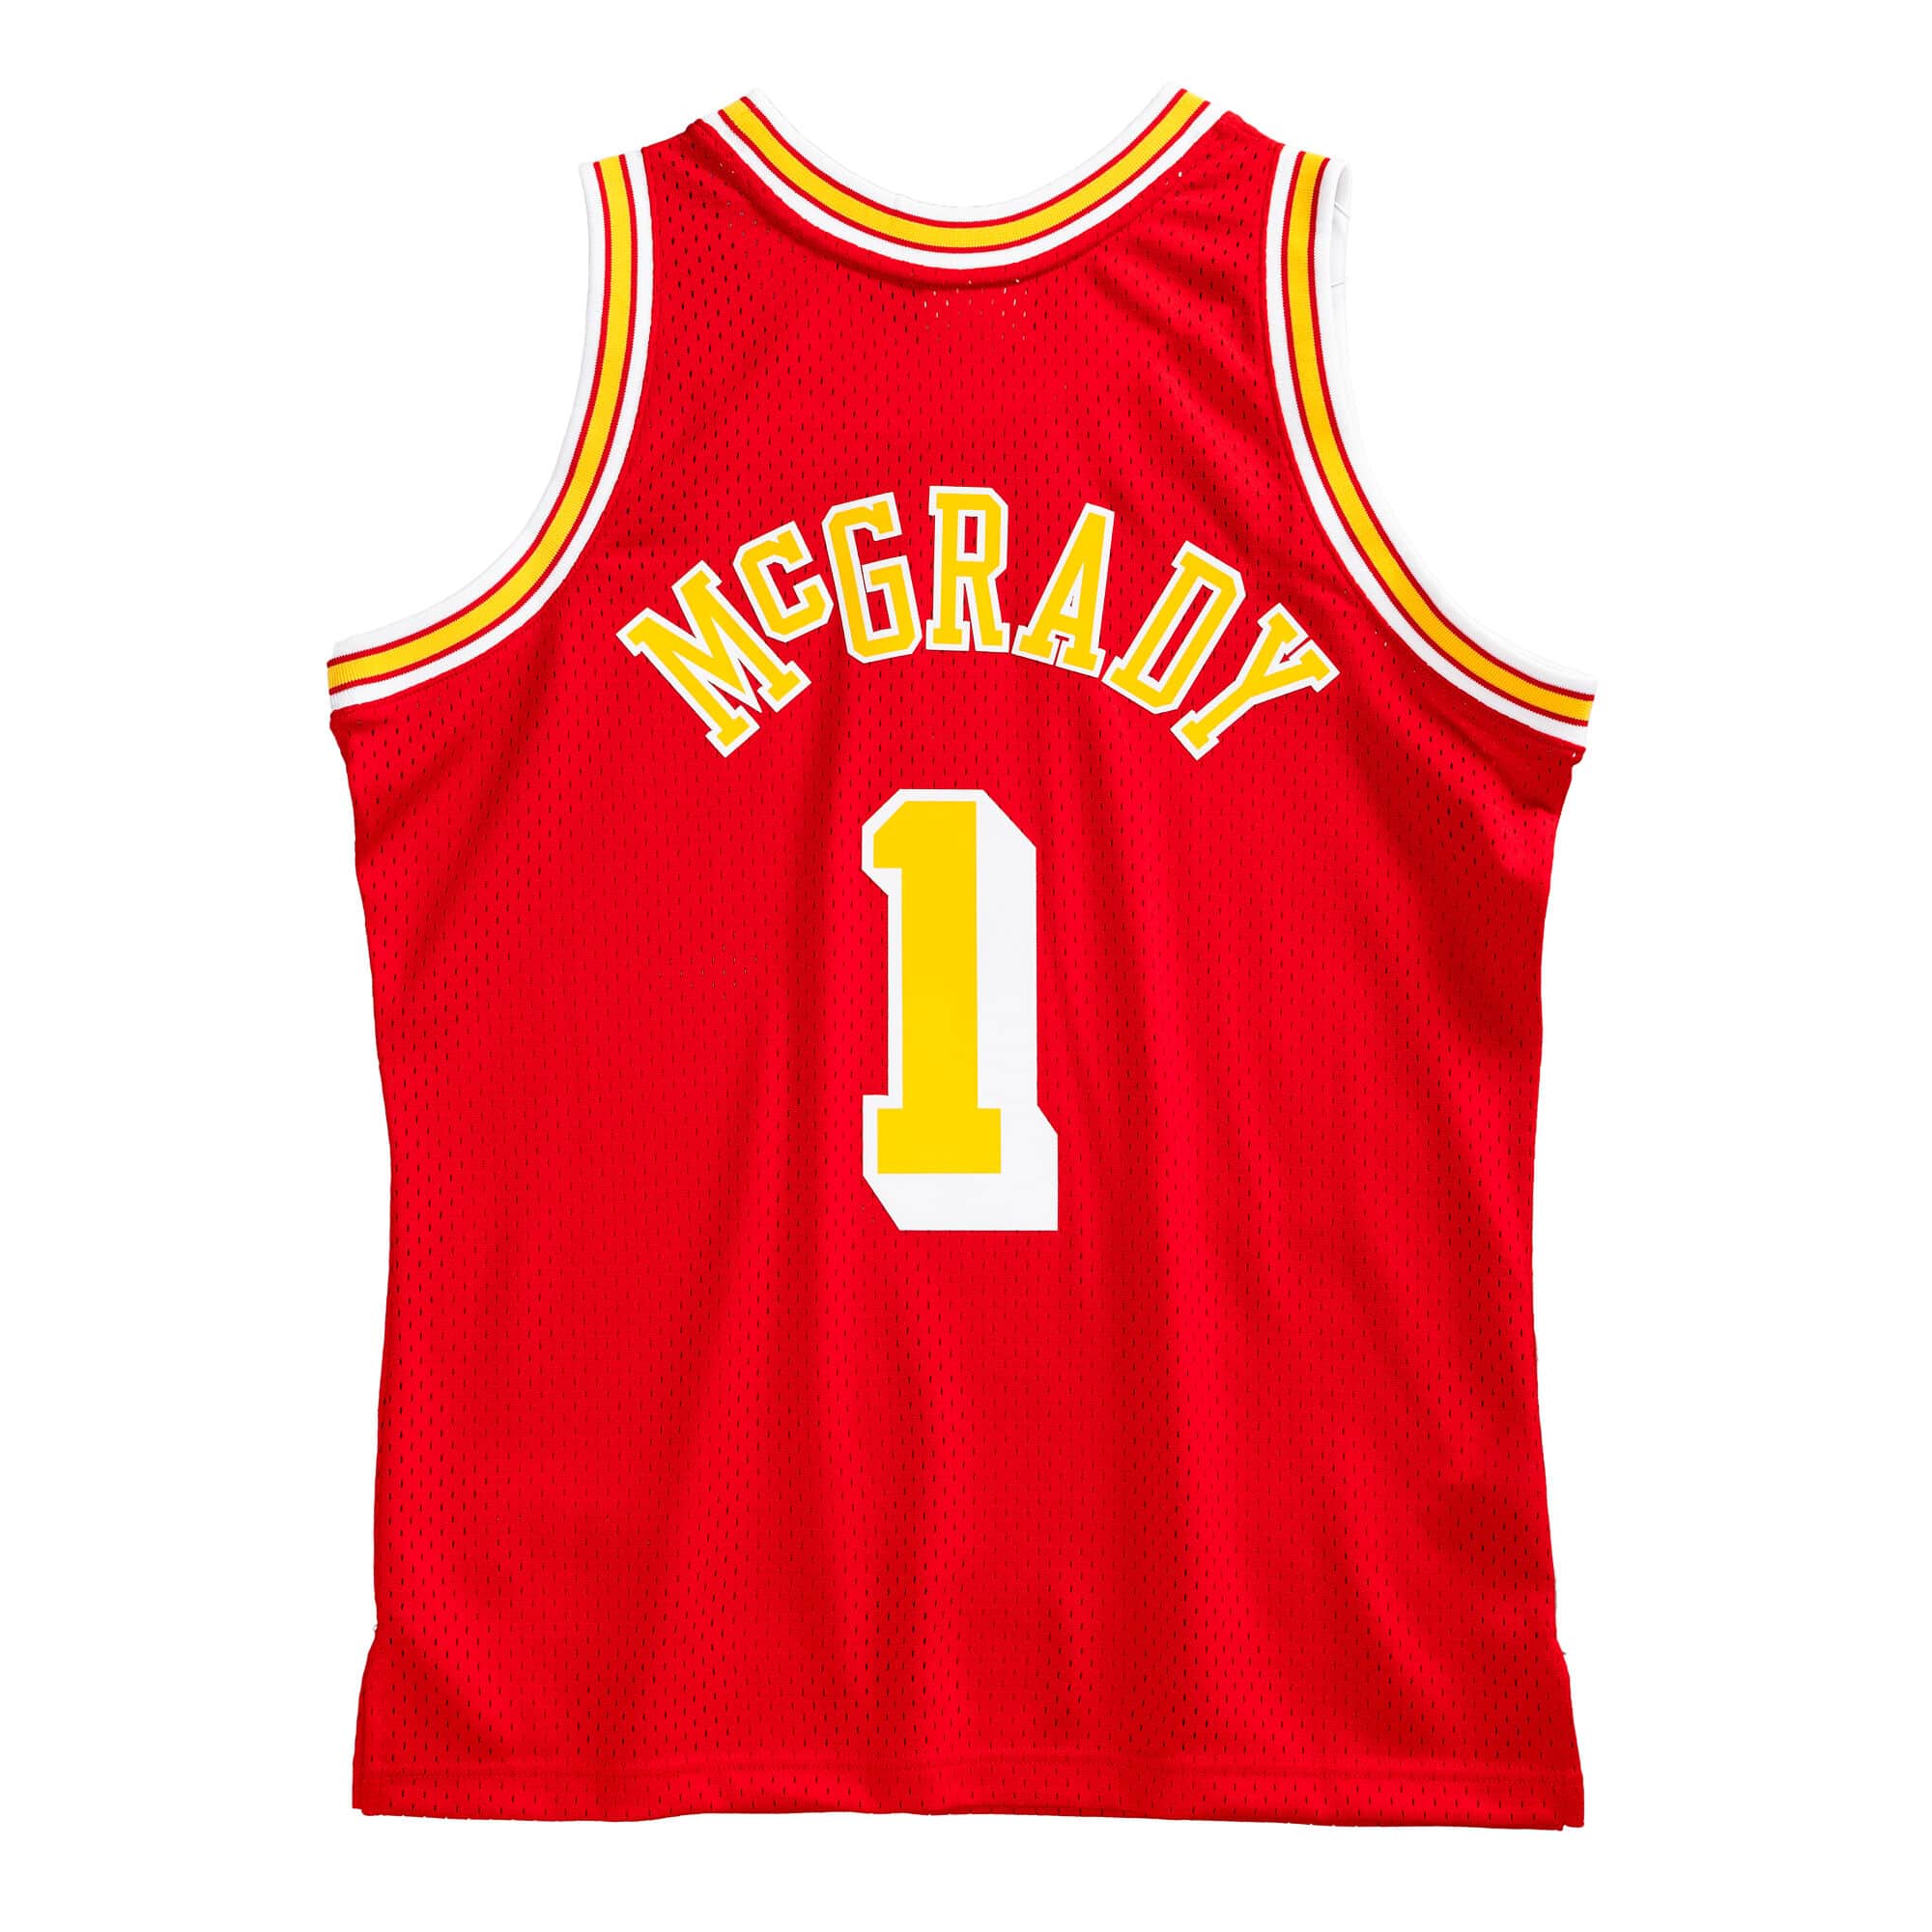 Mitchell & Ness Men's Houston Rockets Hardwood Classic Swingman Jersey - Tracy McGrady - Red